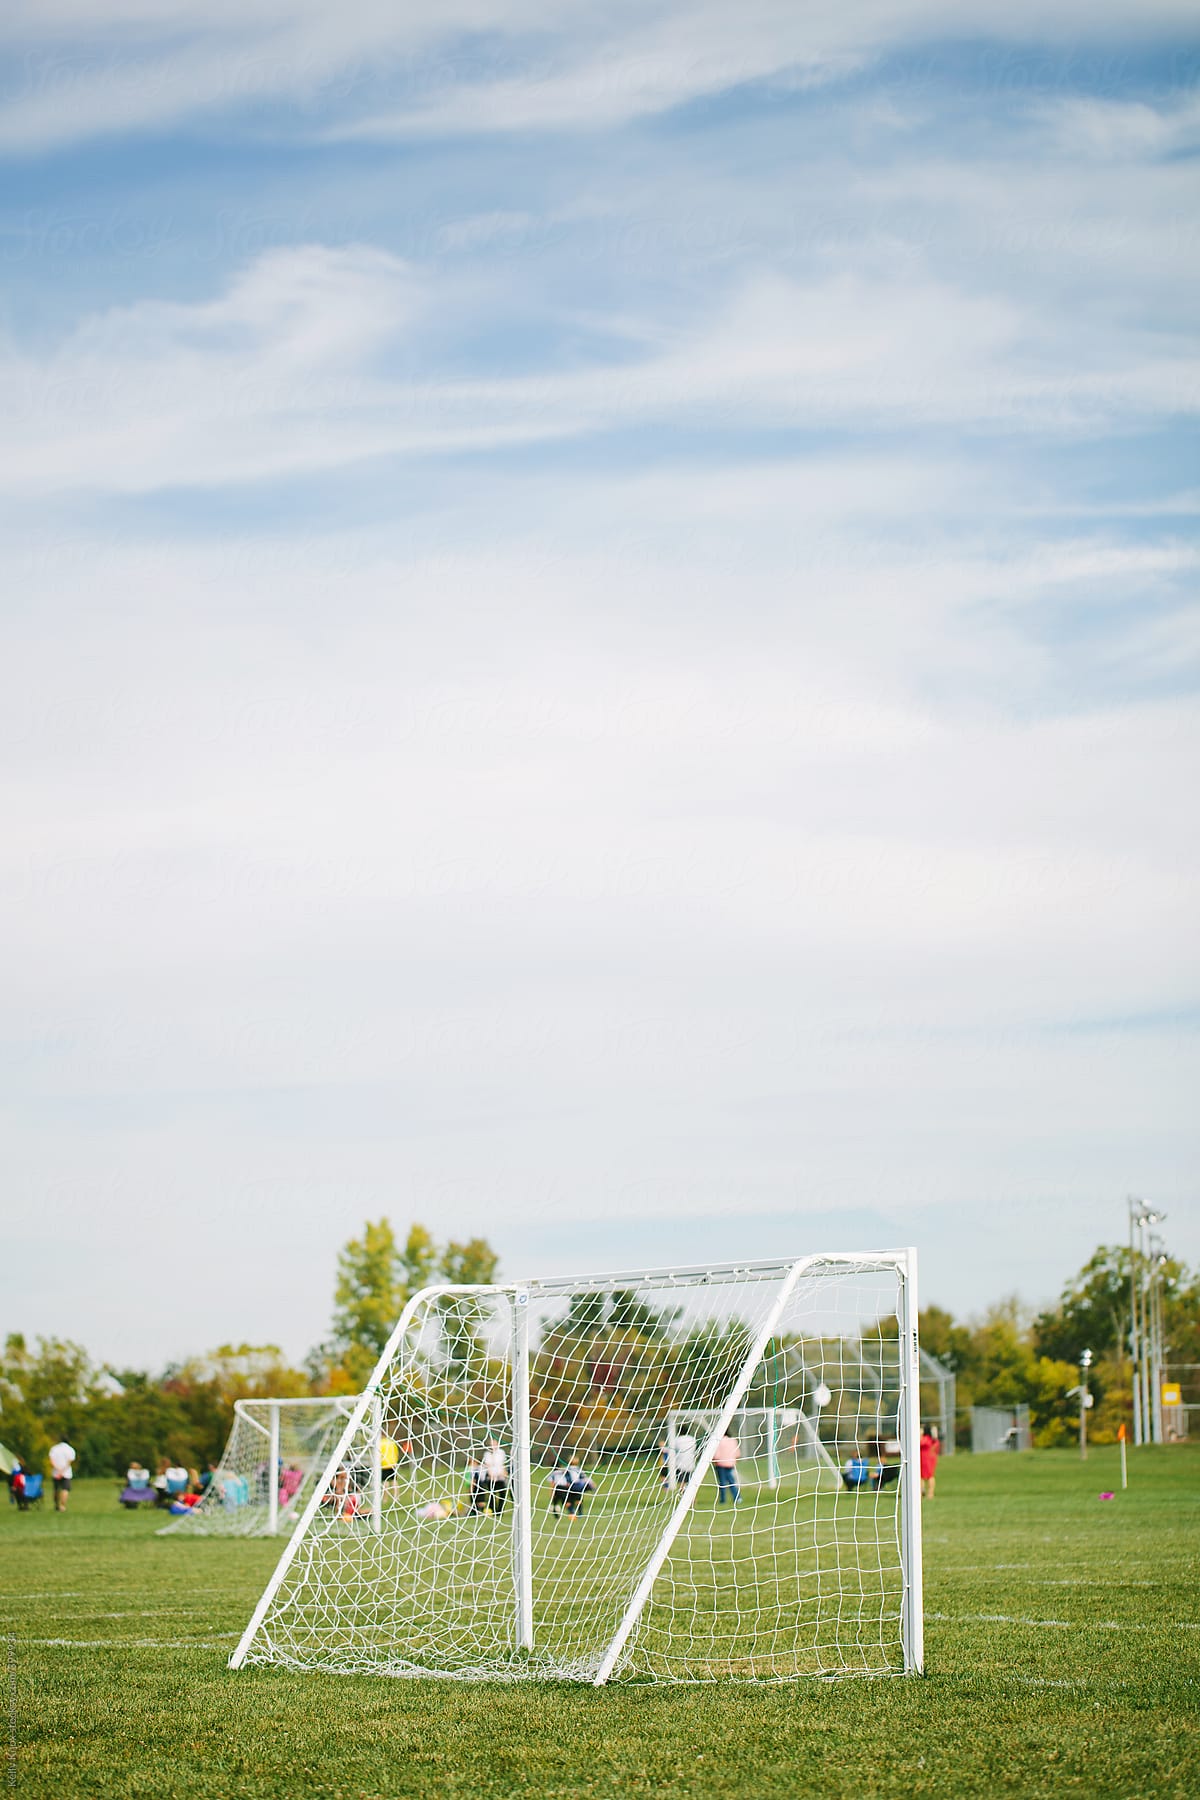 goal on a soccer field